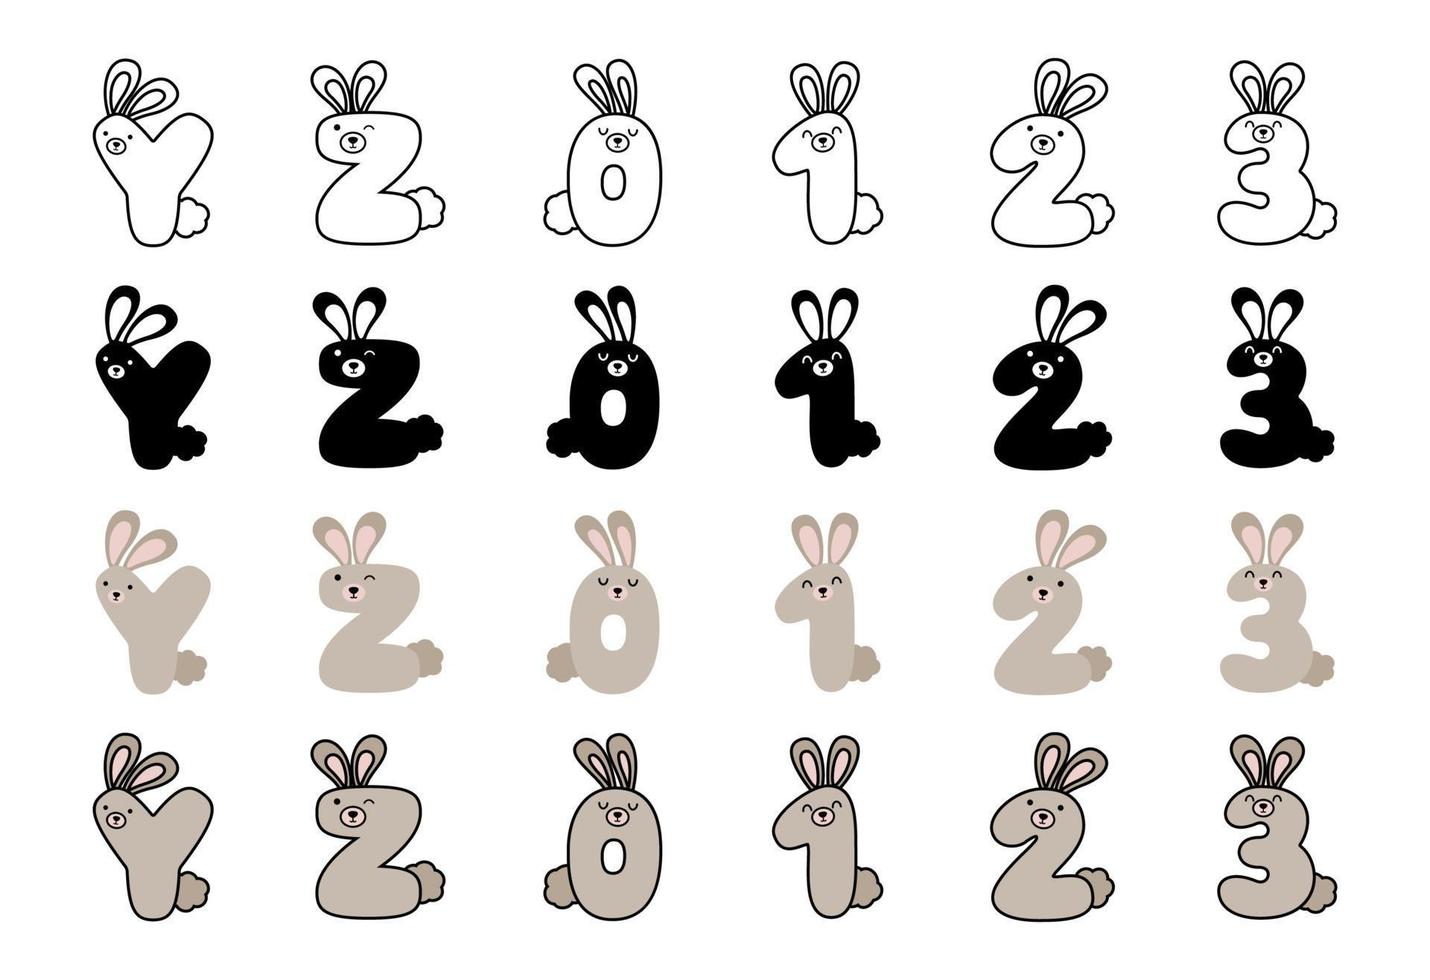 Rabbit alphabet in cartoon style vector